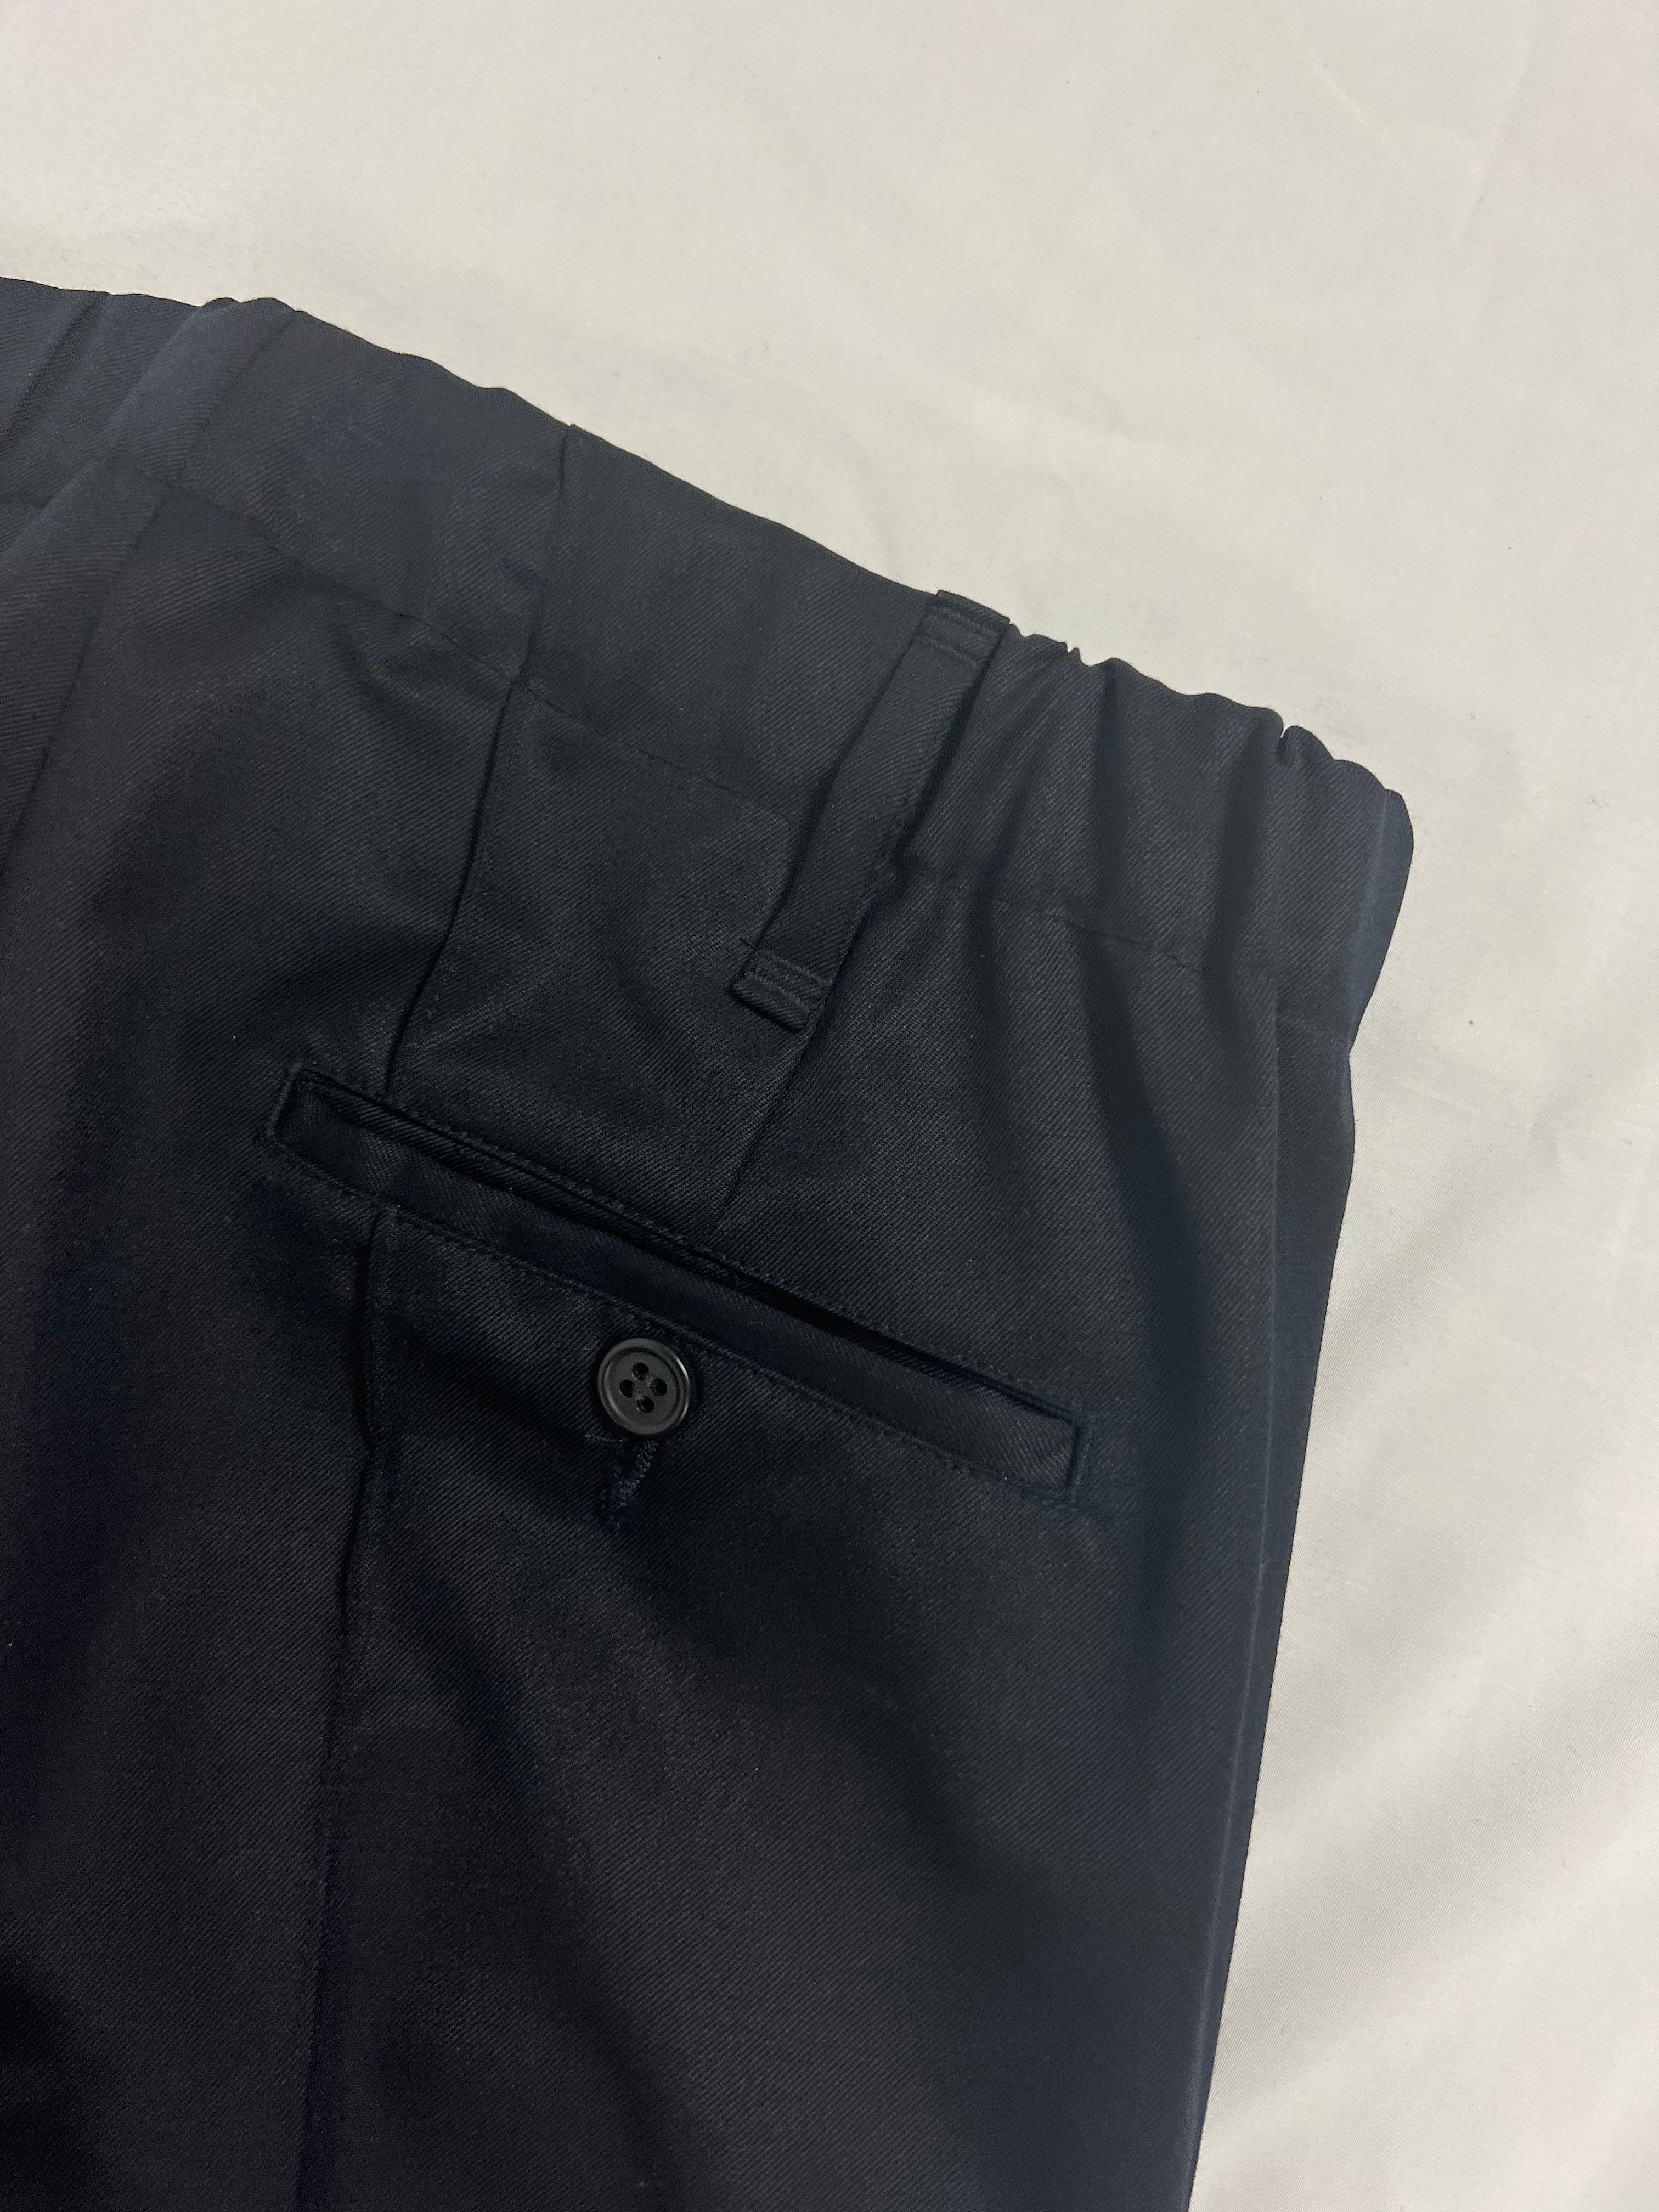 Julien David Navy Trousers Pants For Sale 2